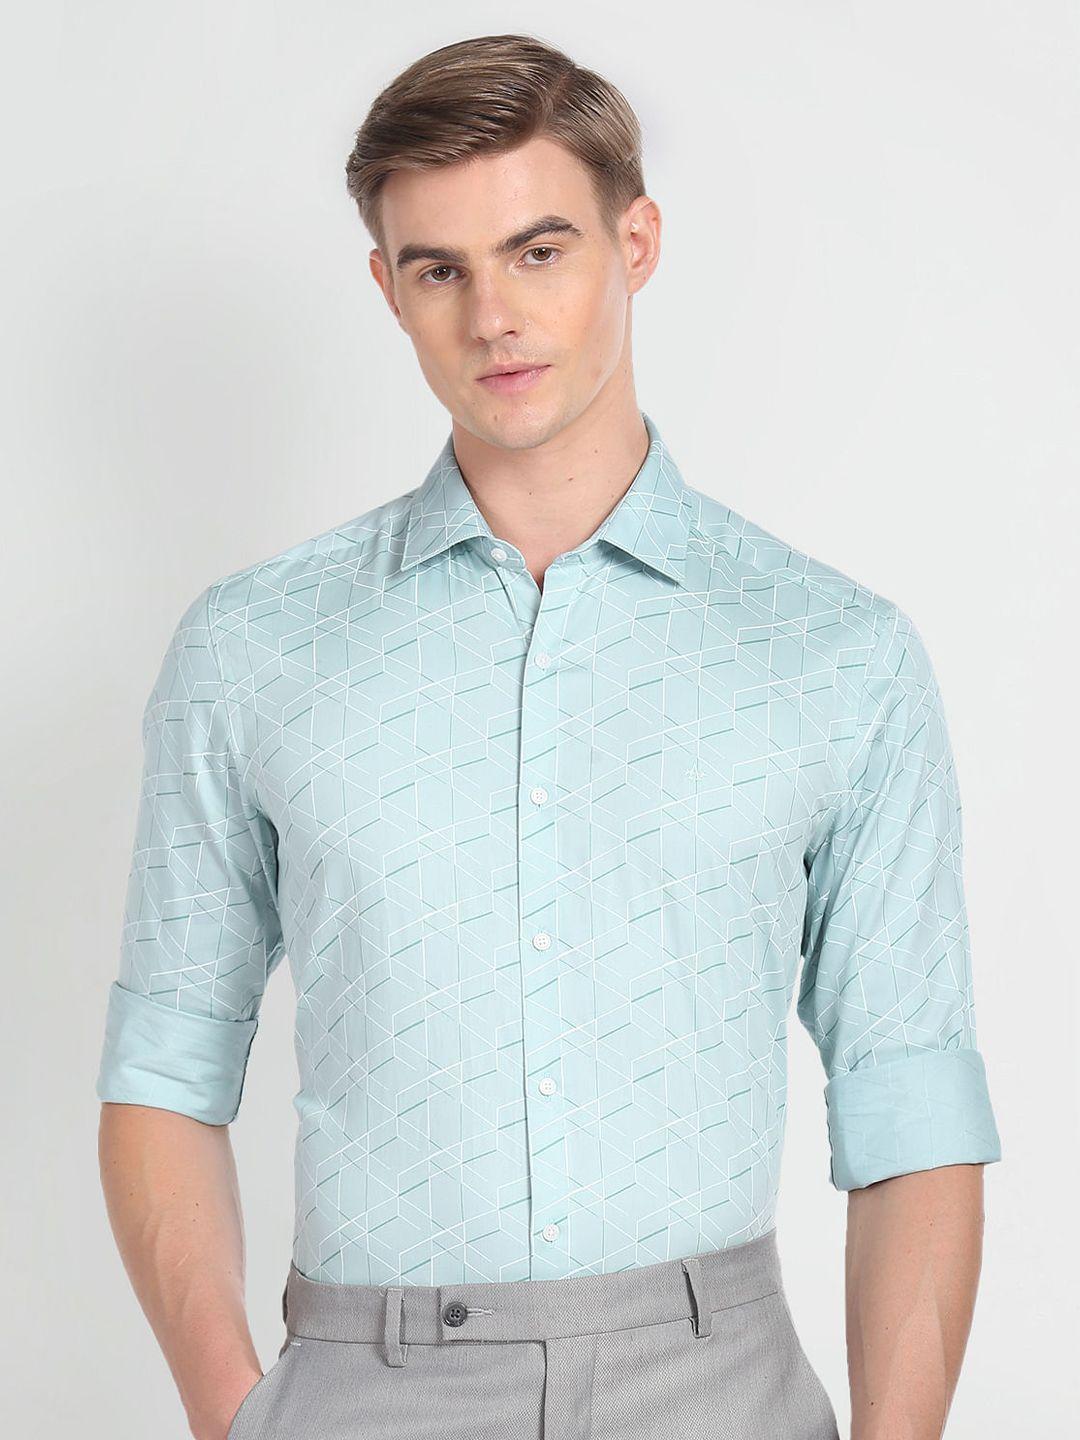 arrow-slim-fit-geometric-printed-twill-weave-pure-cotton-formal-shirt